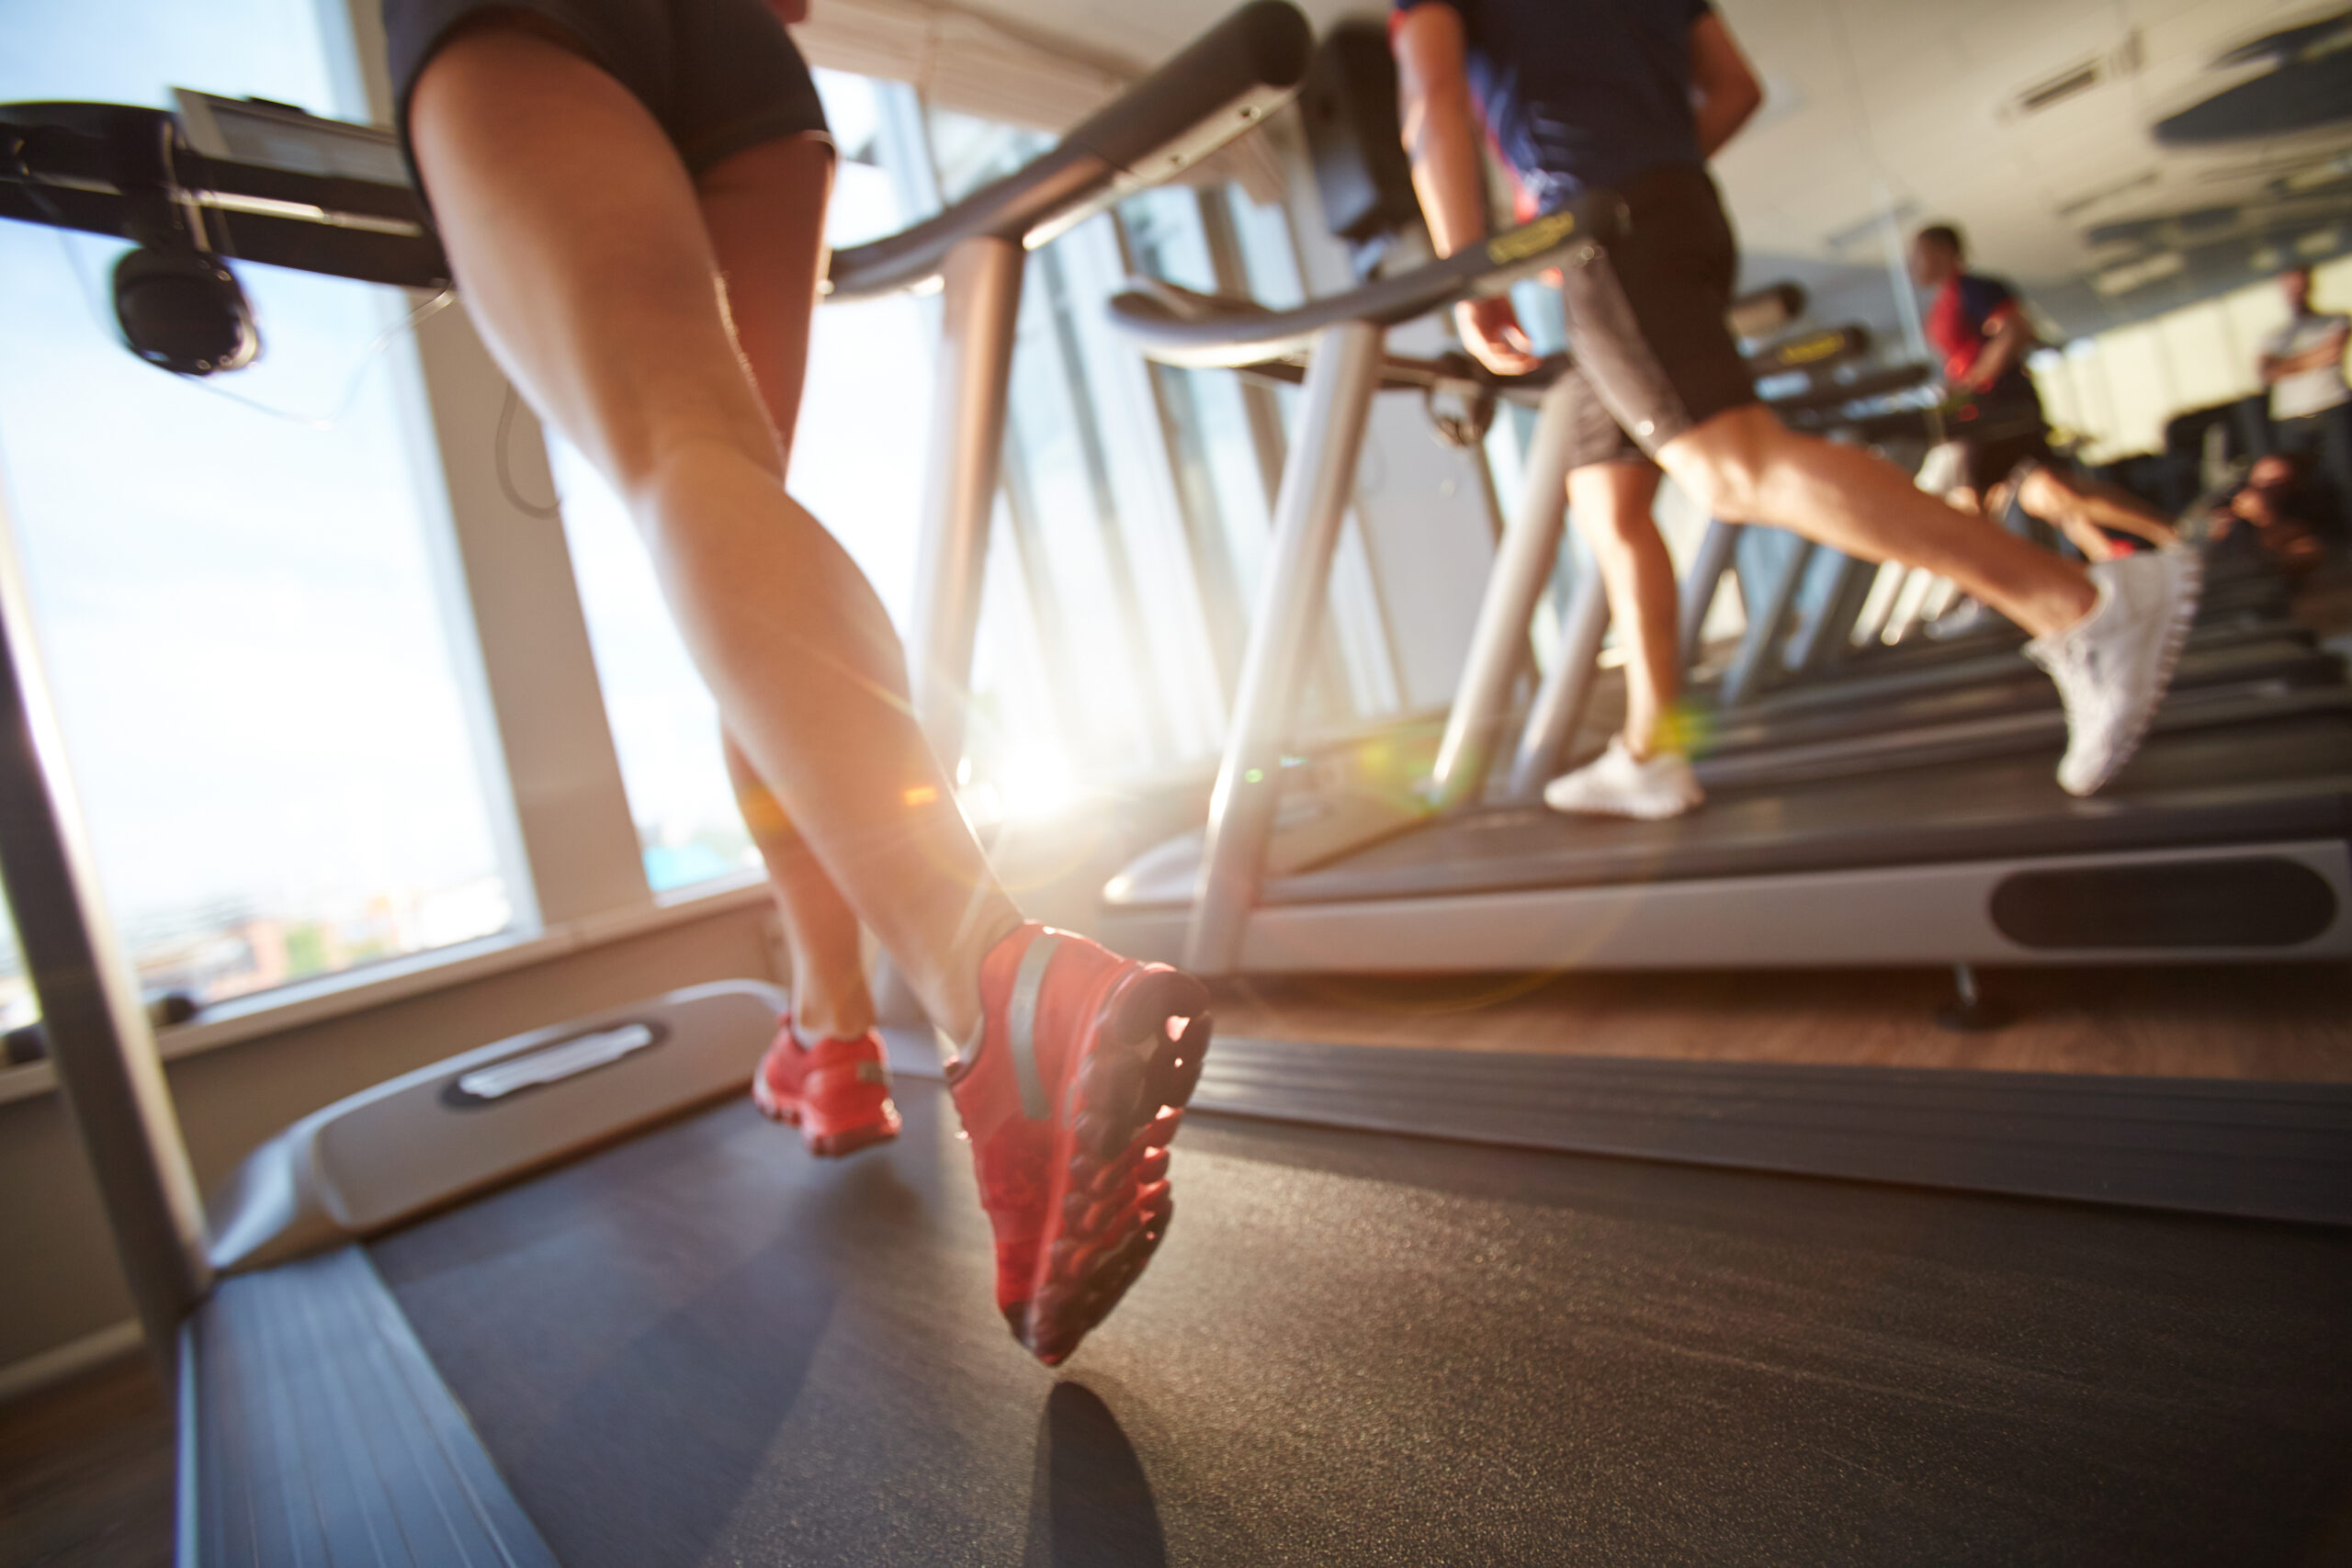 treadmills with decline